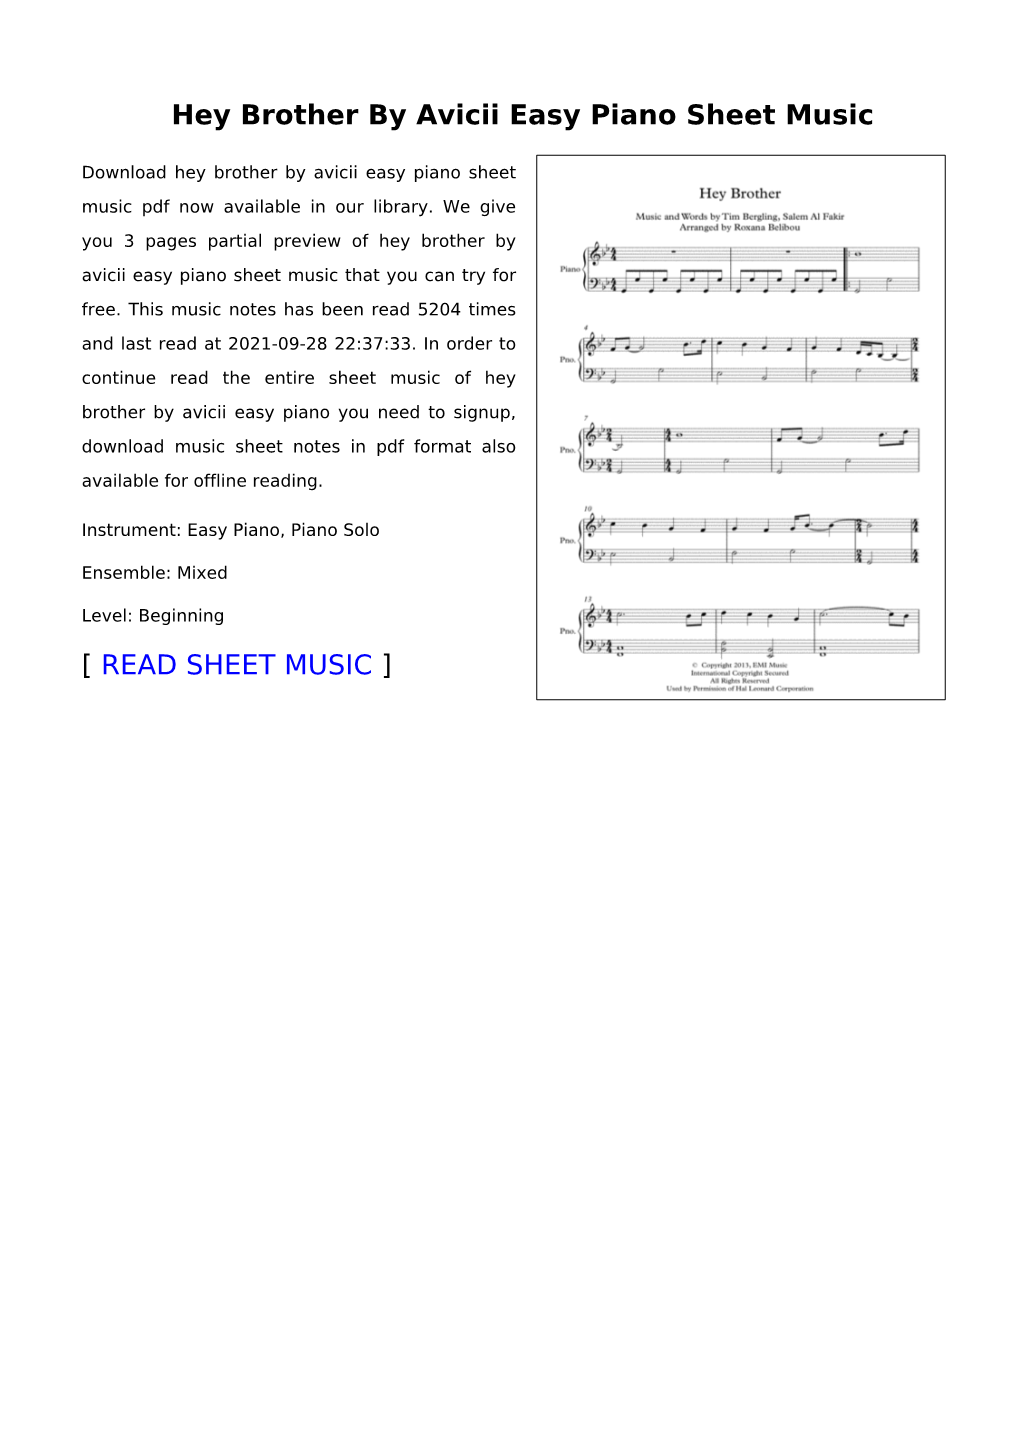 Hey Brother by Avicii Easy Piano Sheet Music